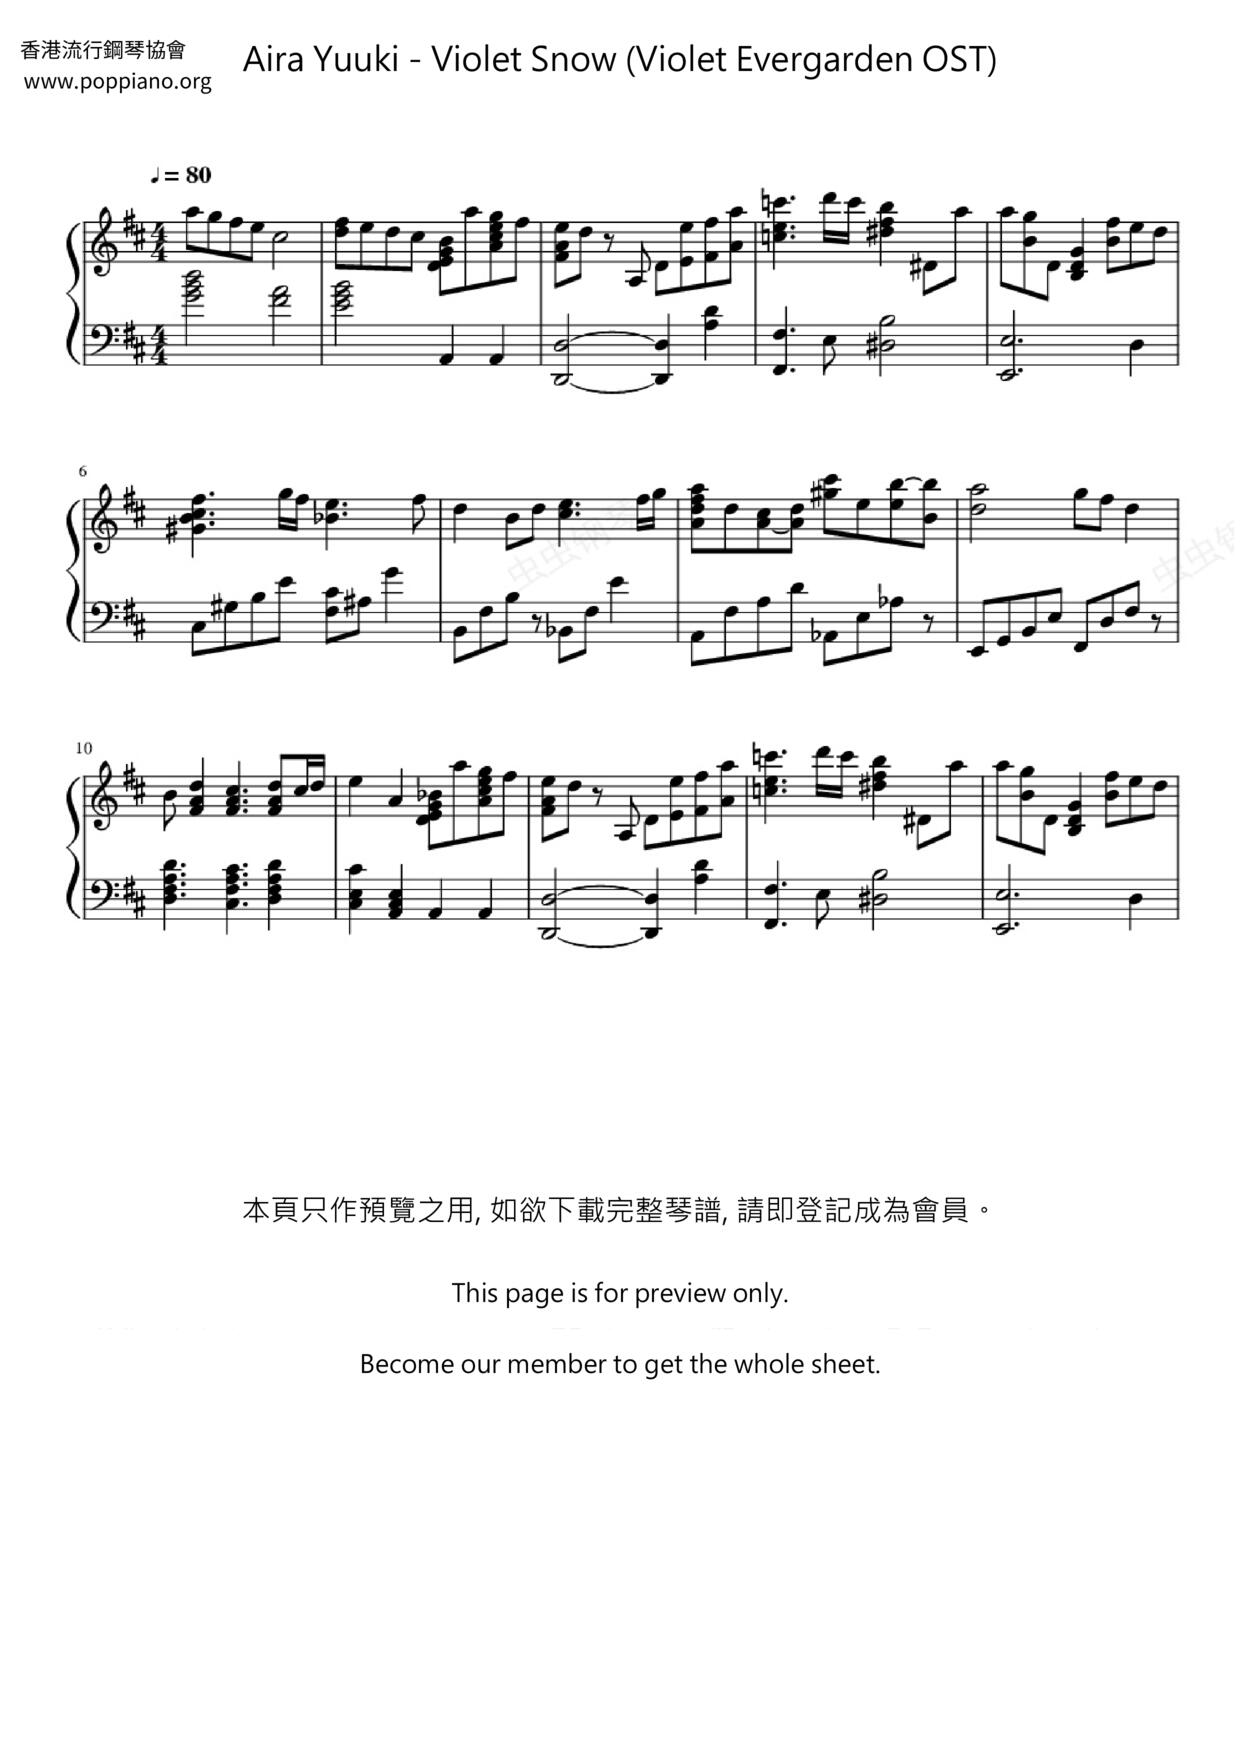 Violet Snow (Violet Evergarden OST) Score